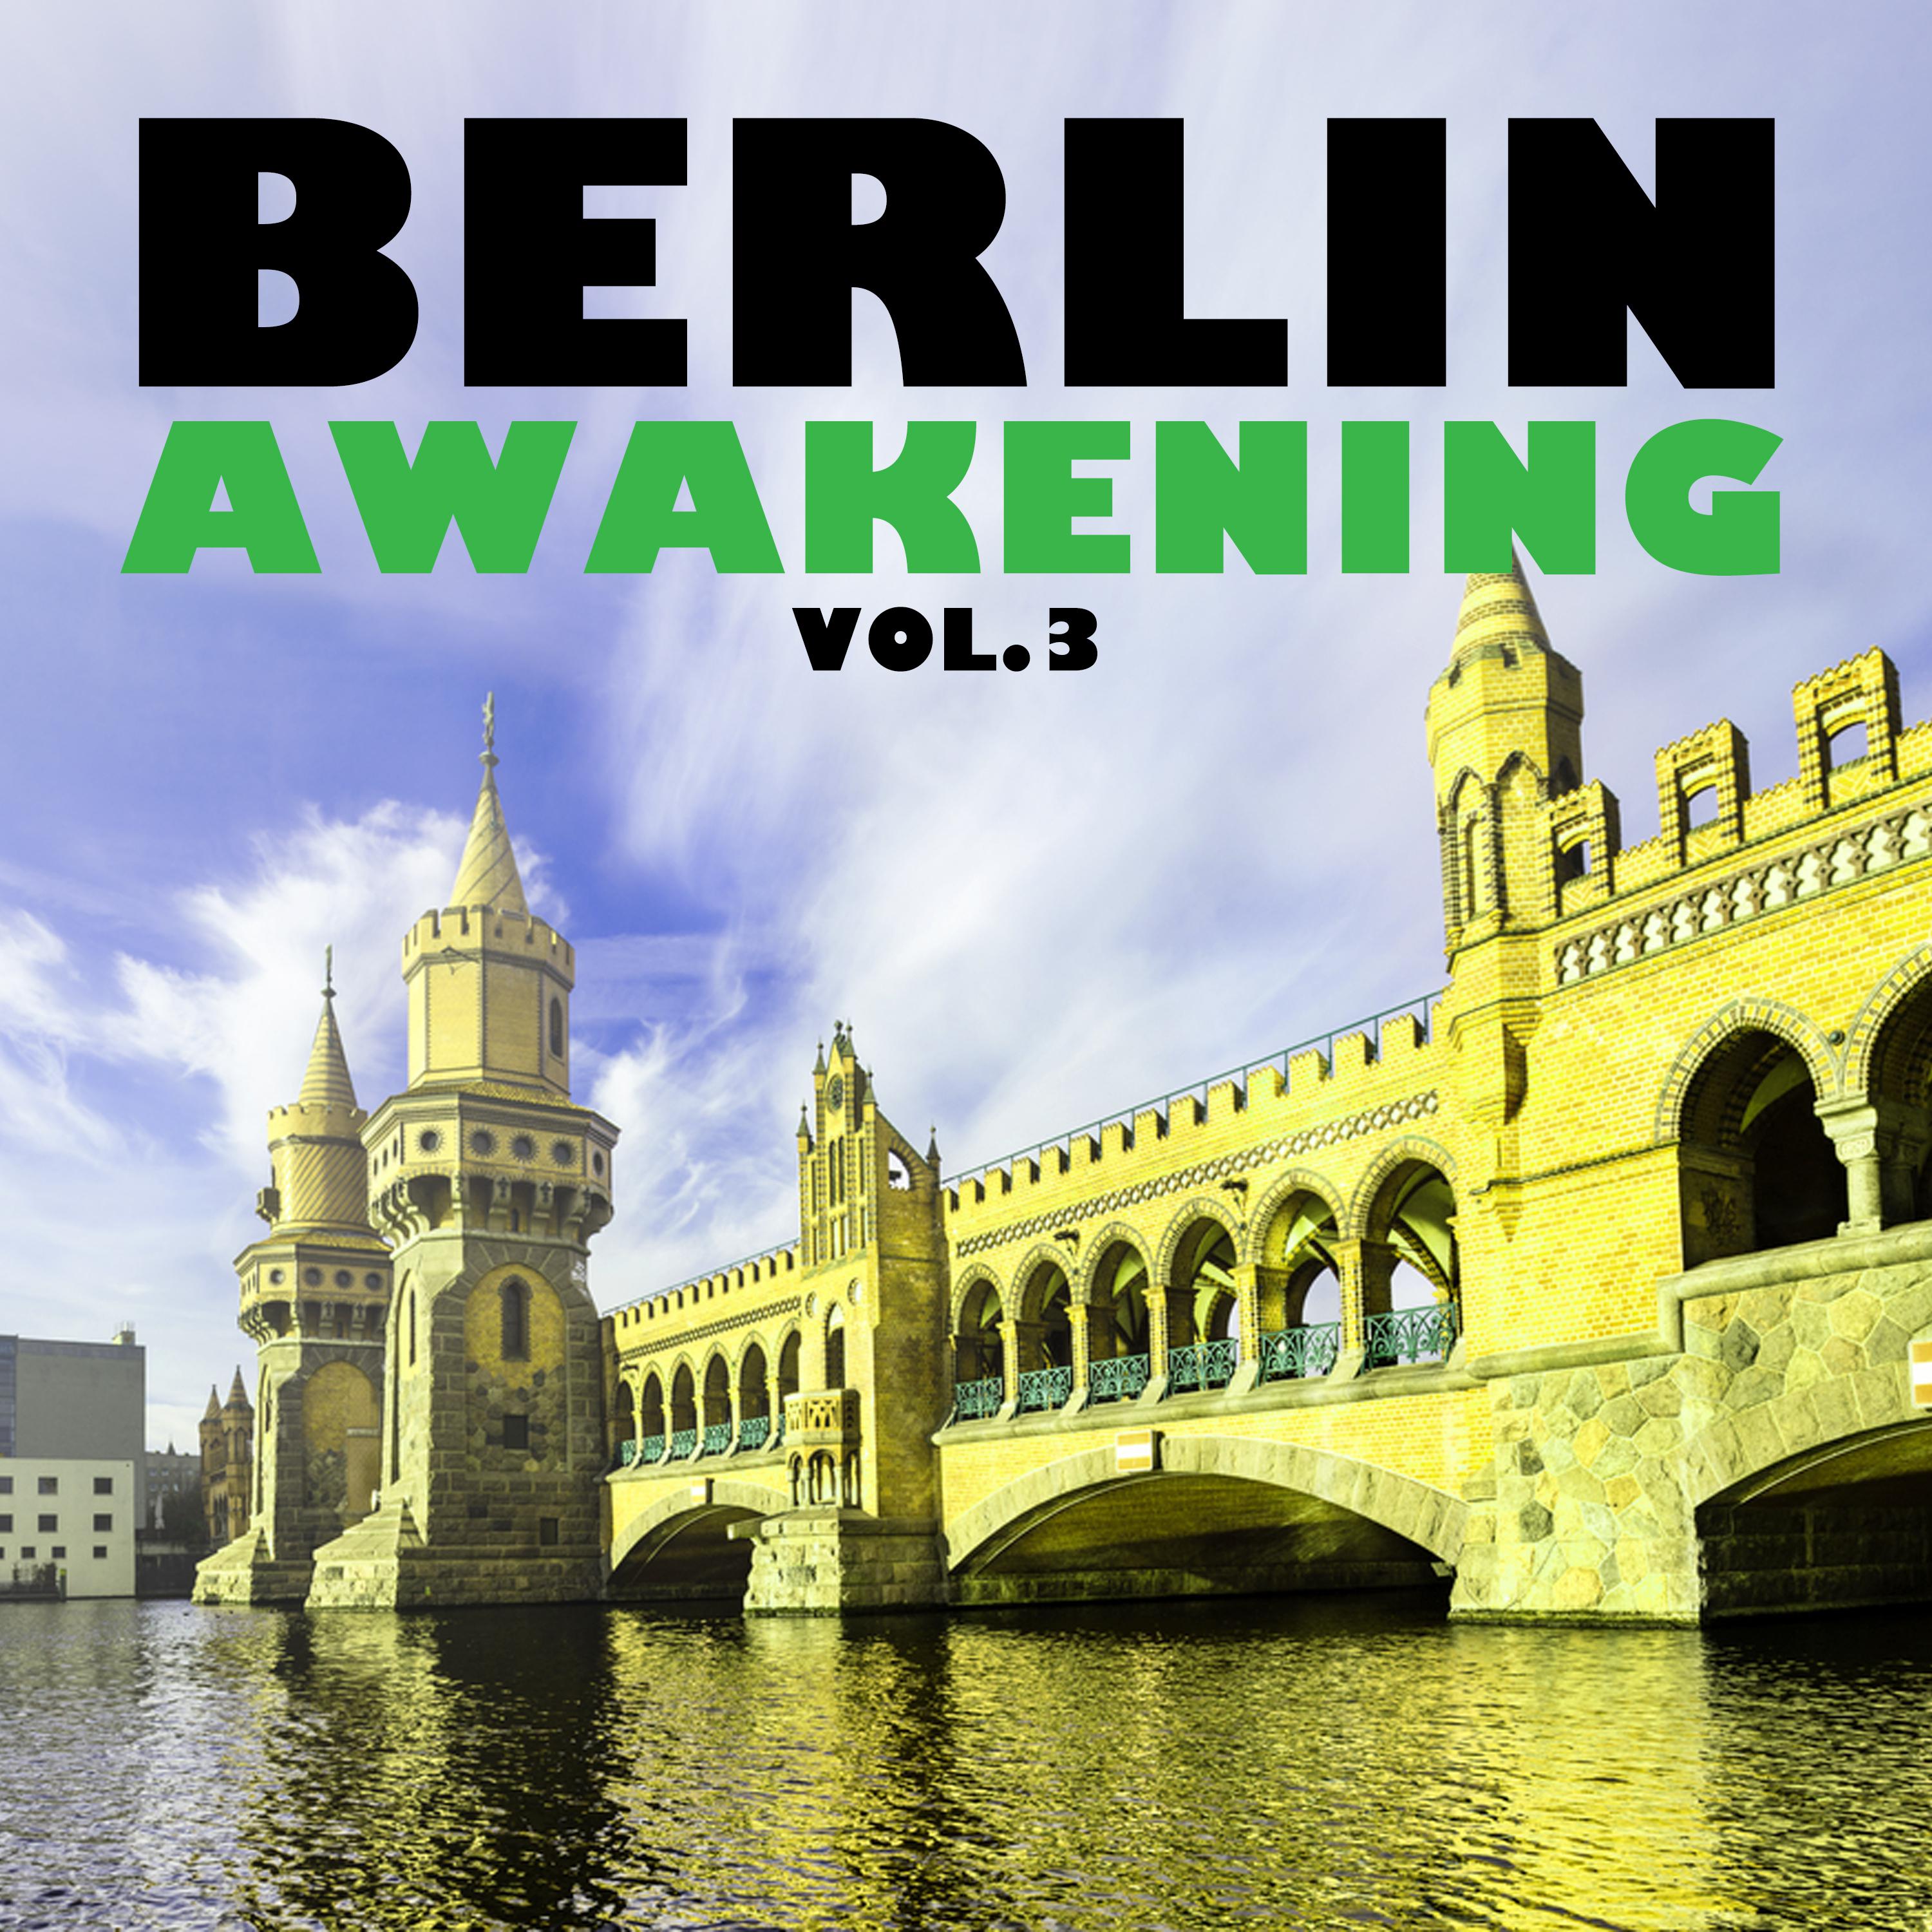 Berlin Awakening, Vol. 3